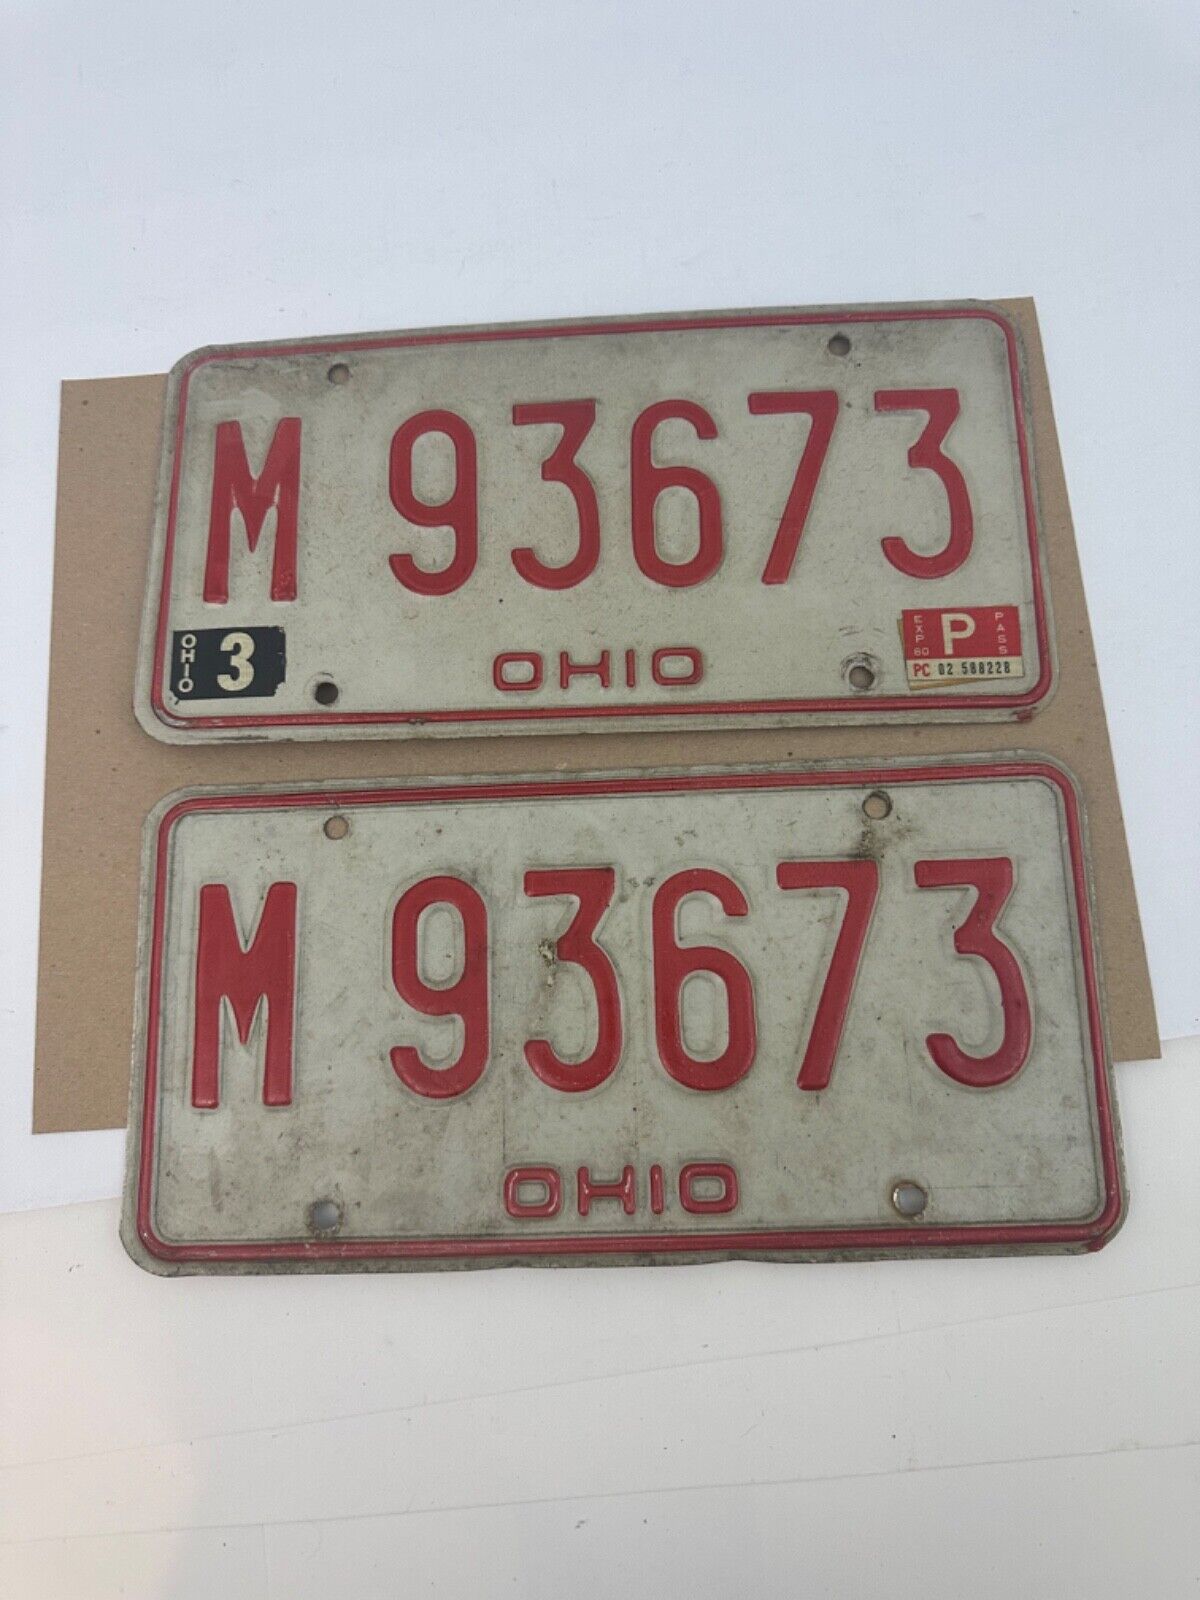 Ohio 1976-1979 License Plate Pair Set M 93673 Vintage Collector Classic Car